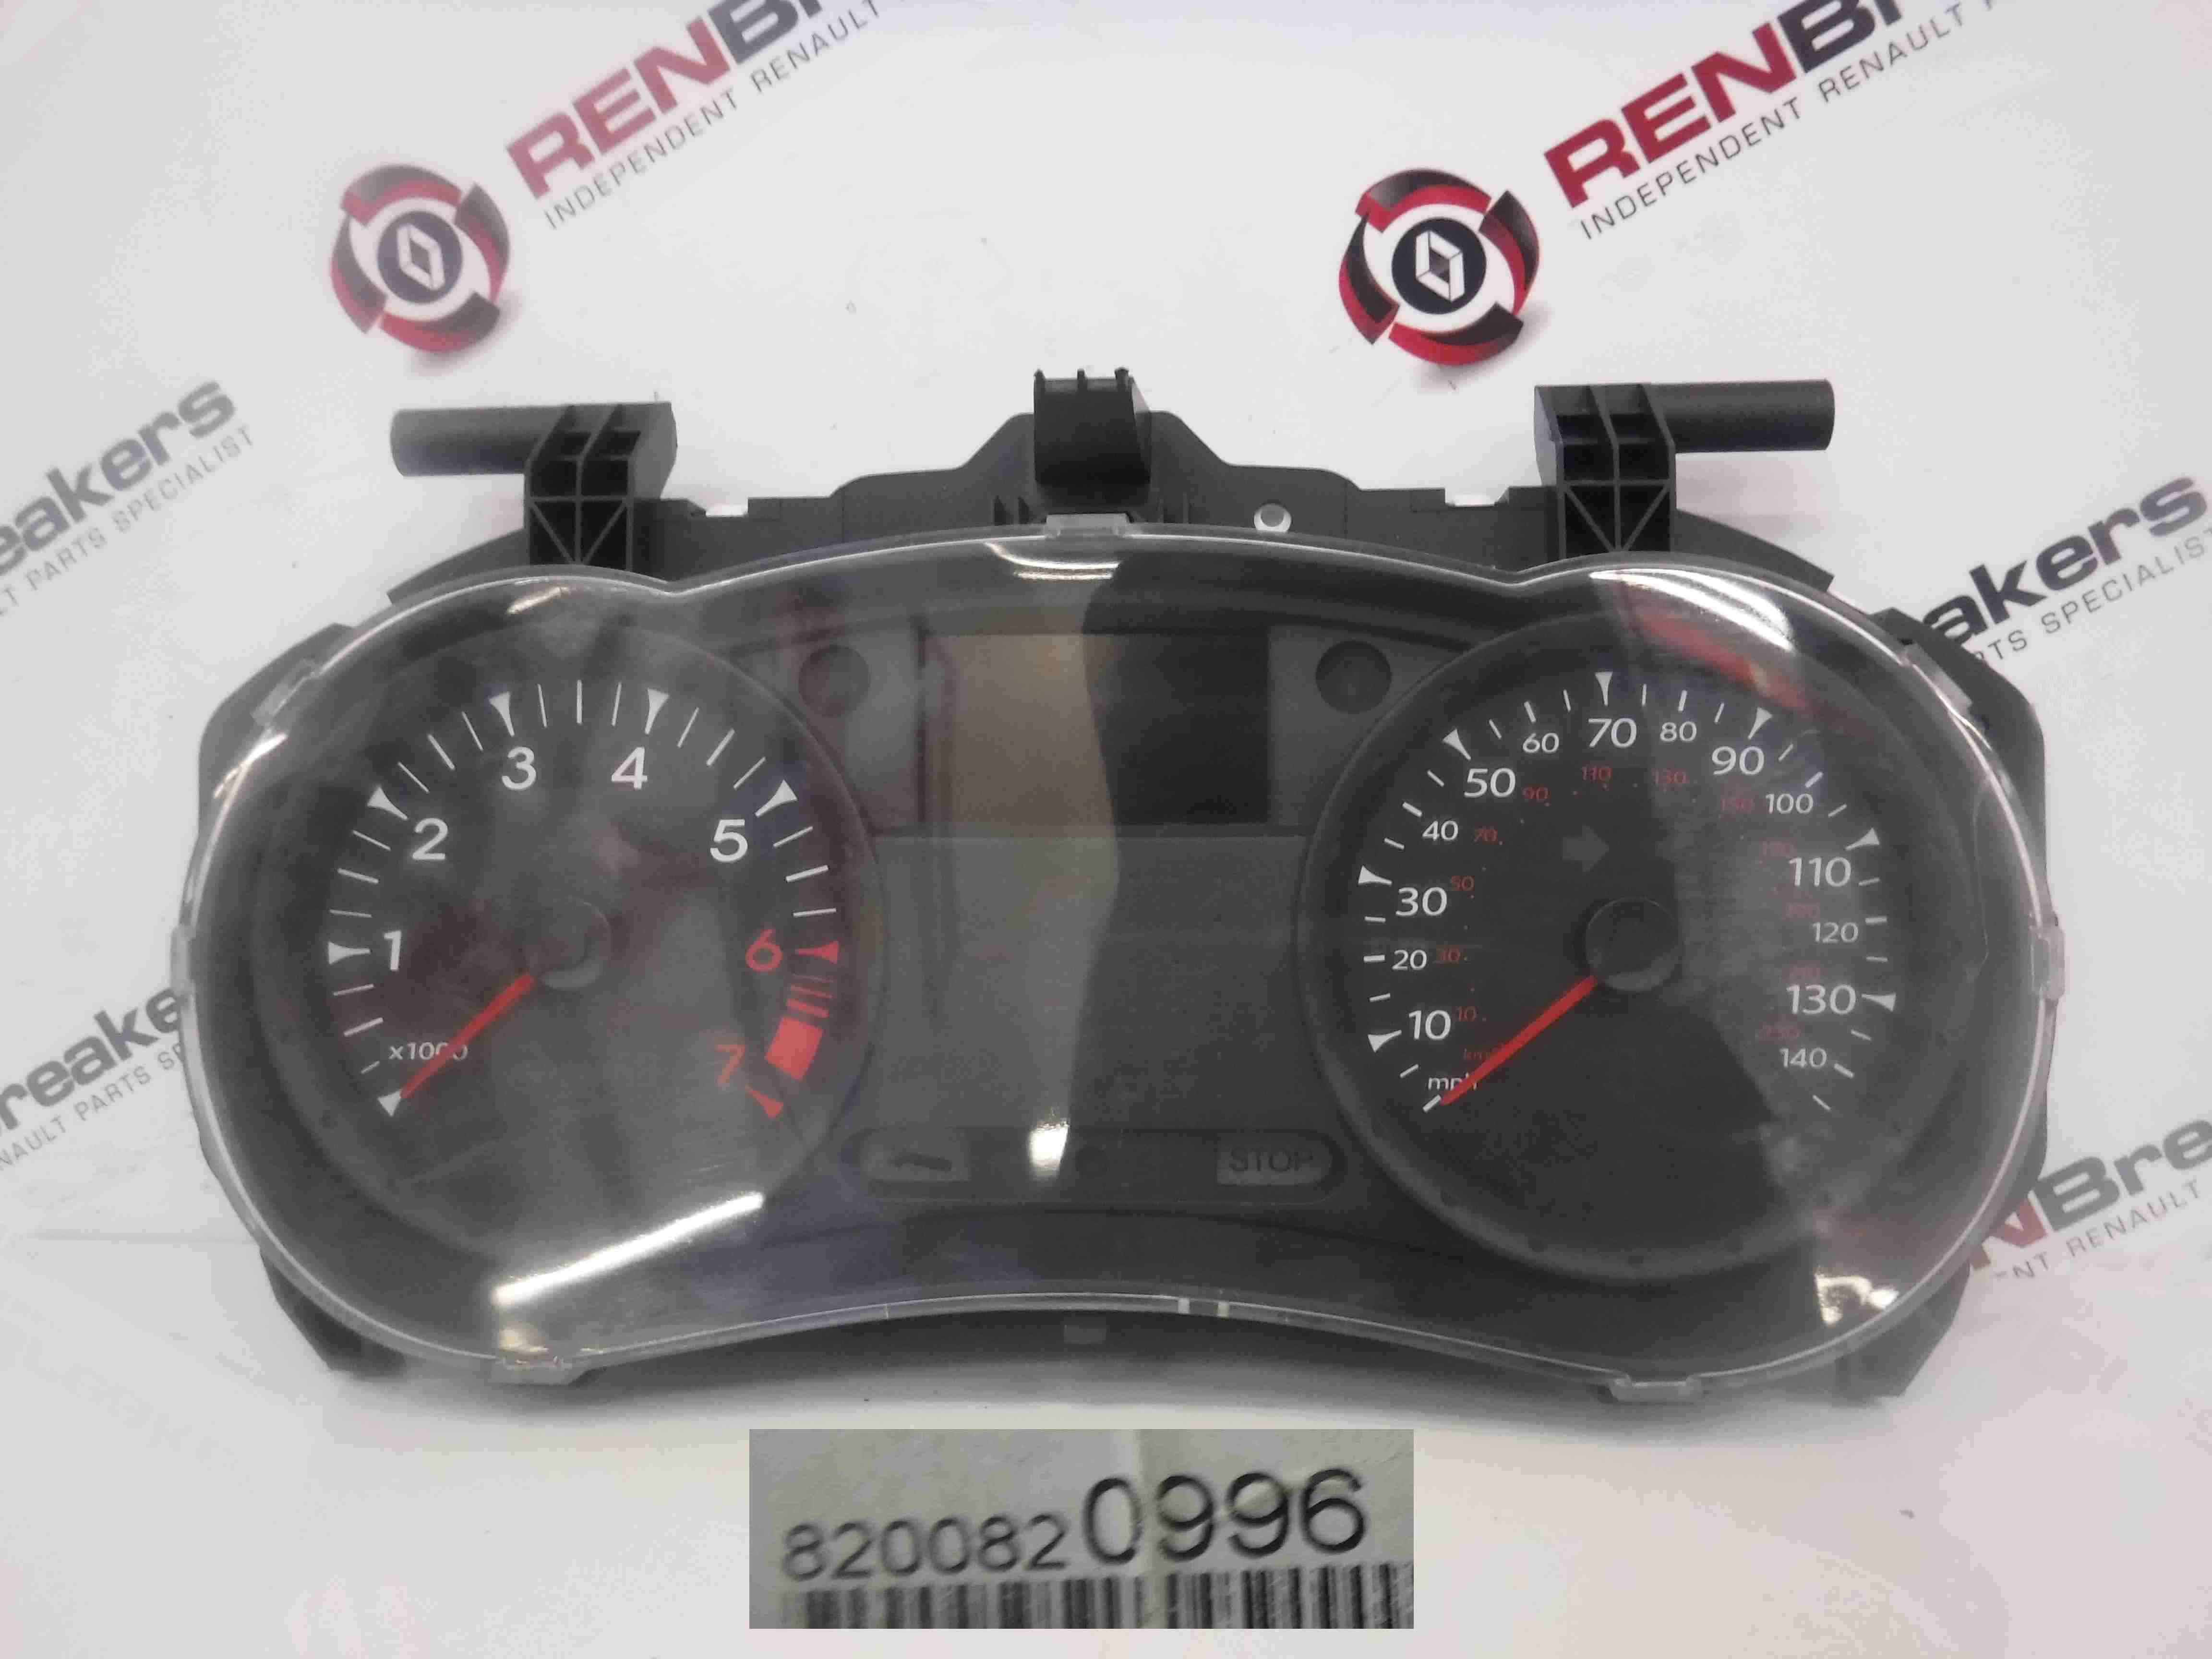 Renault Clio MK3 2005-2012 Instrument Panel Dials Clocks 142K 8200820996